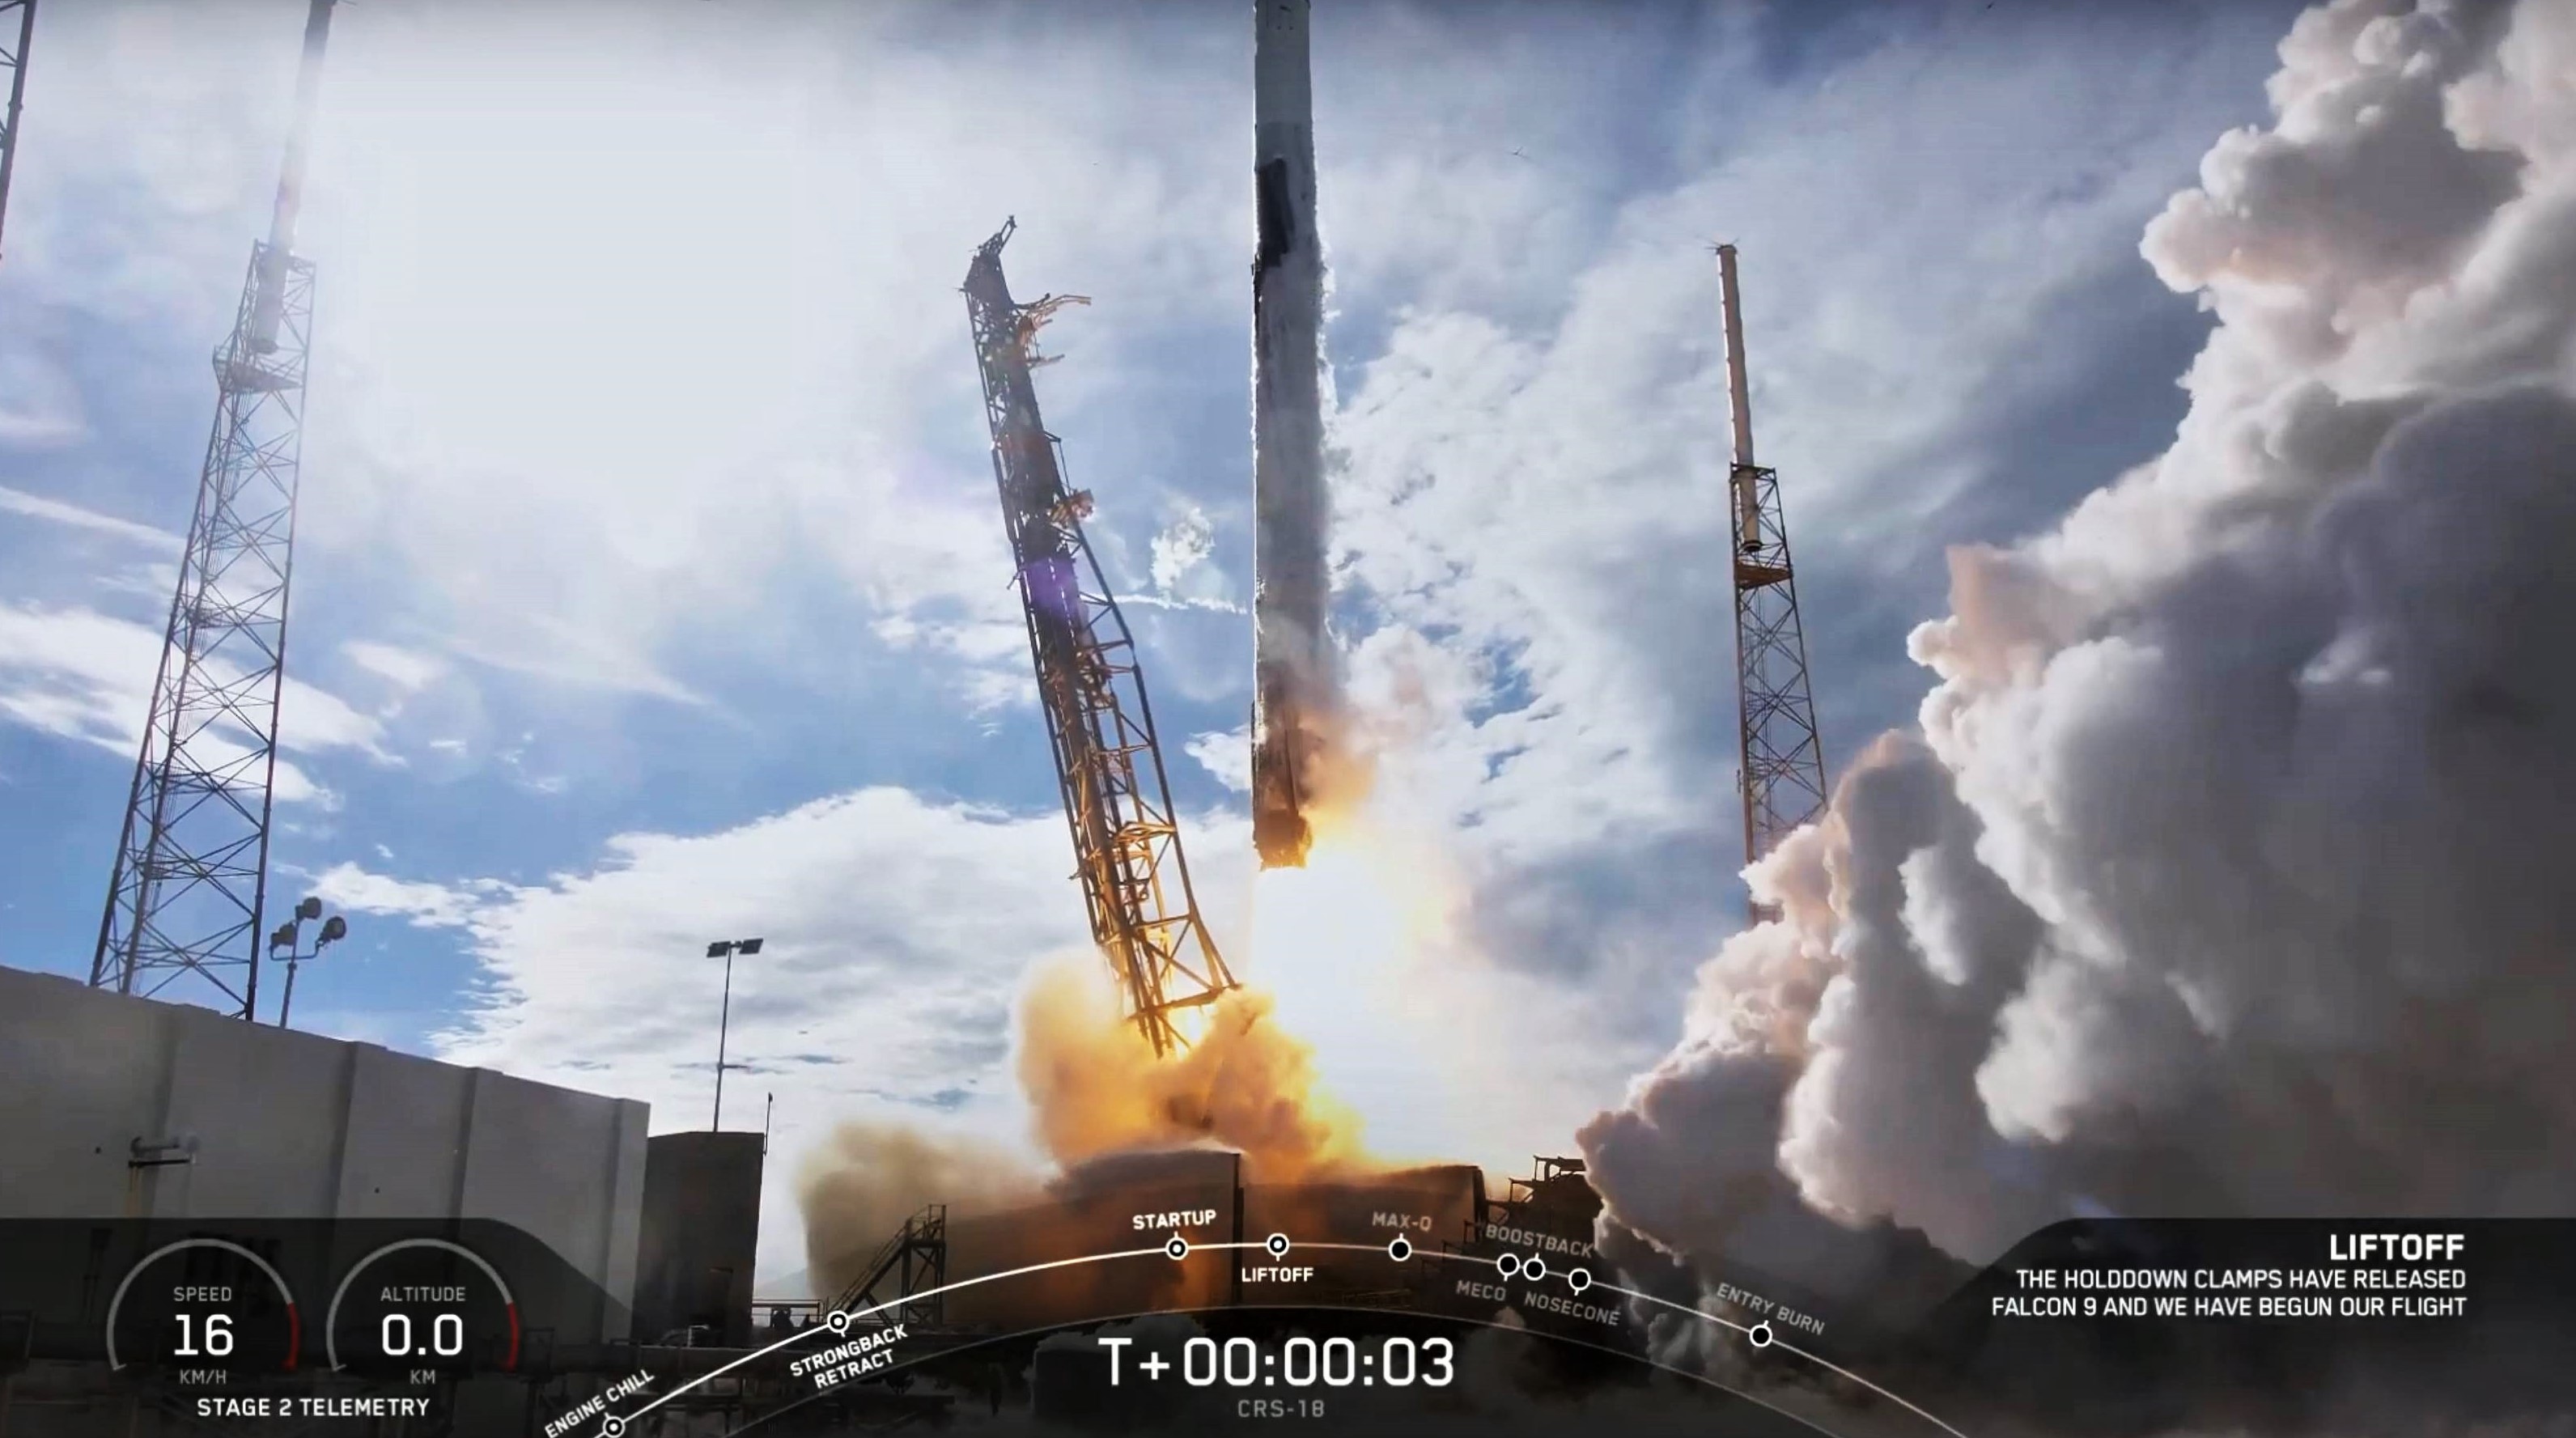 Cargo Dragon CRS-18 Falcon 9 B1056 (SpaceX) webcast 2 liftoff 1